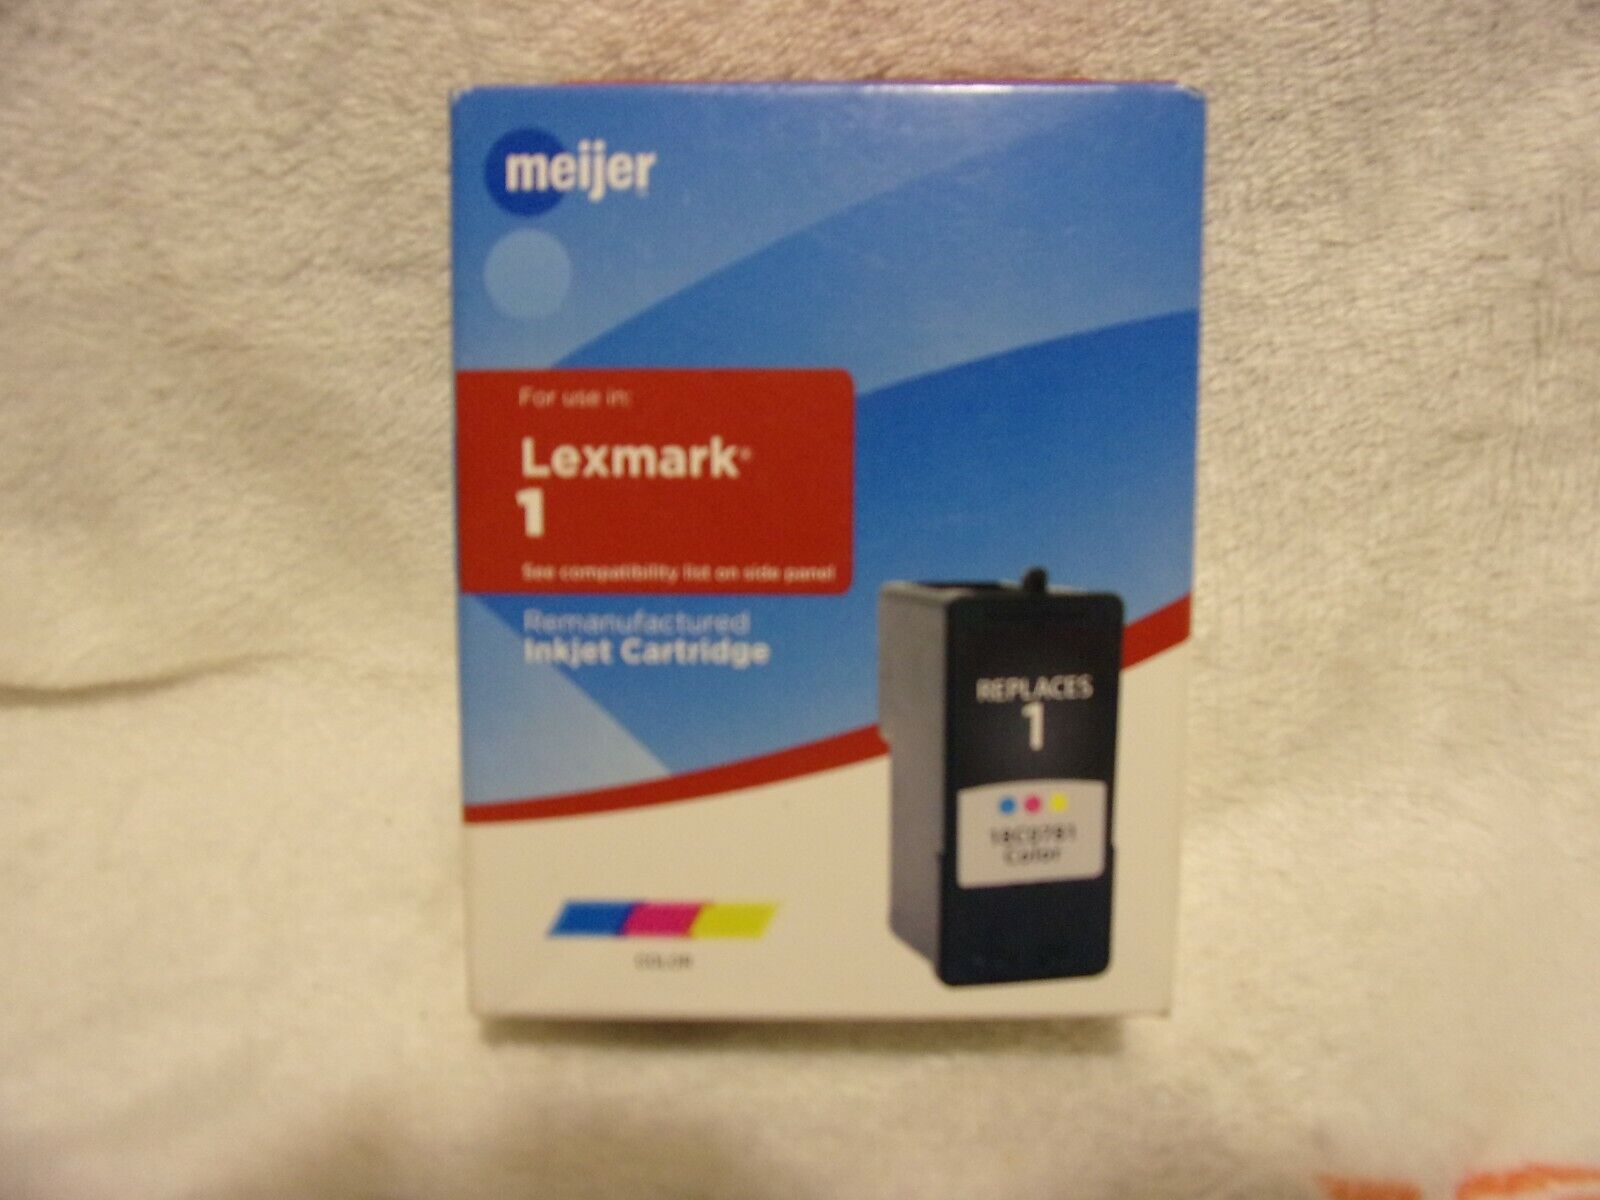 Lexmark Print Cartridge 1 Genuine Lexmark NEW & SEALED